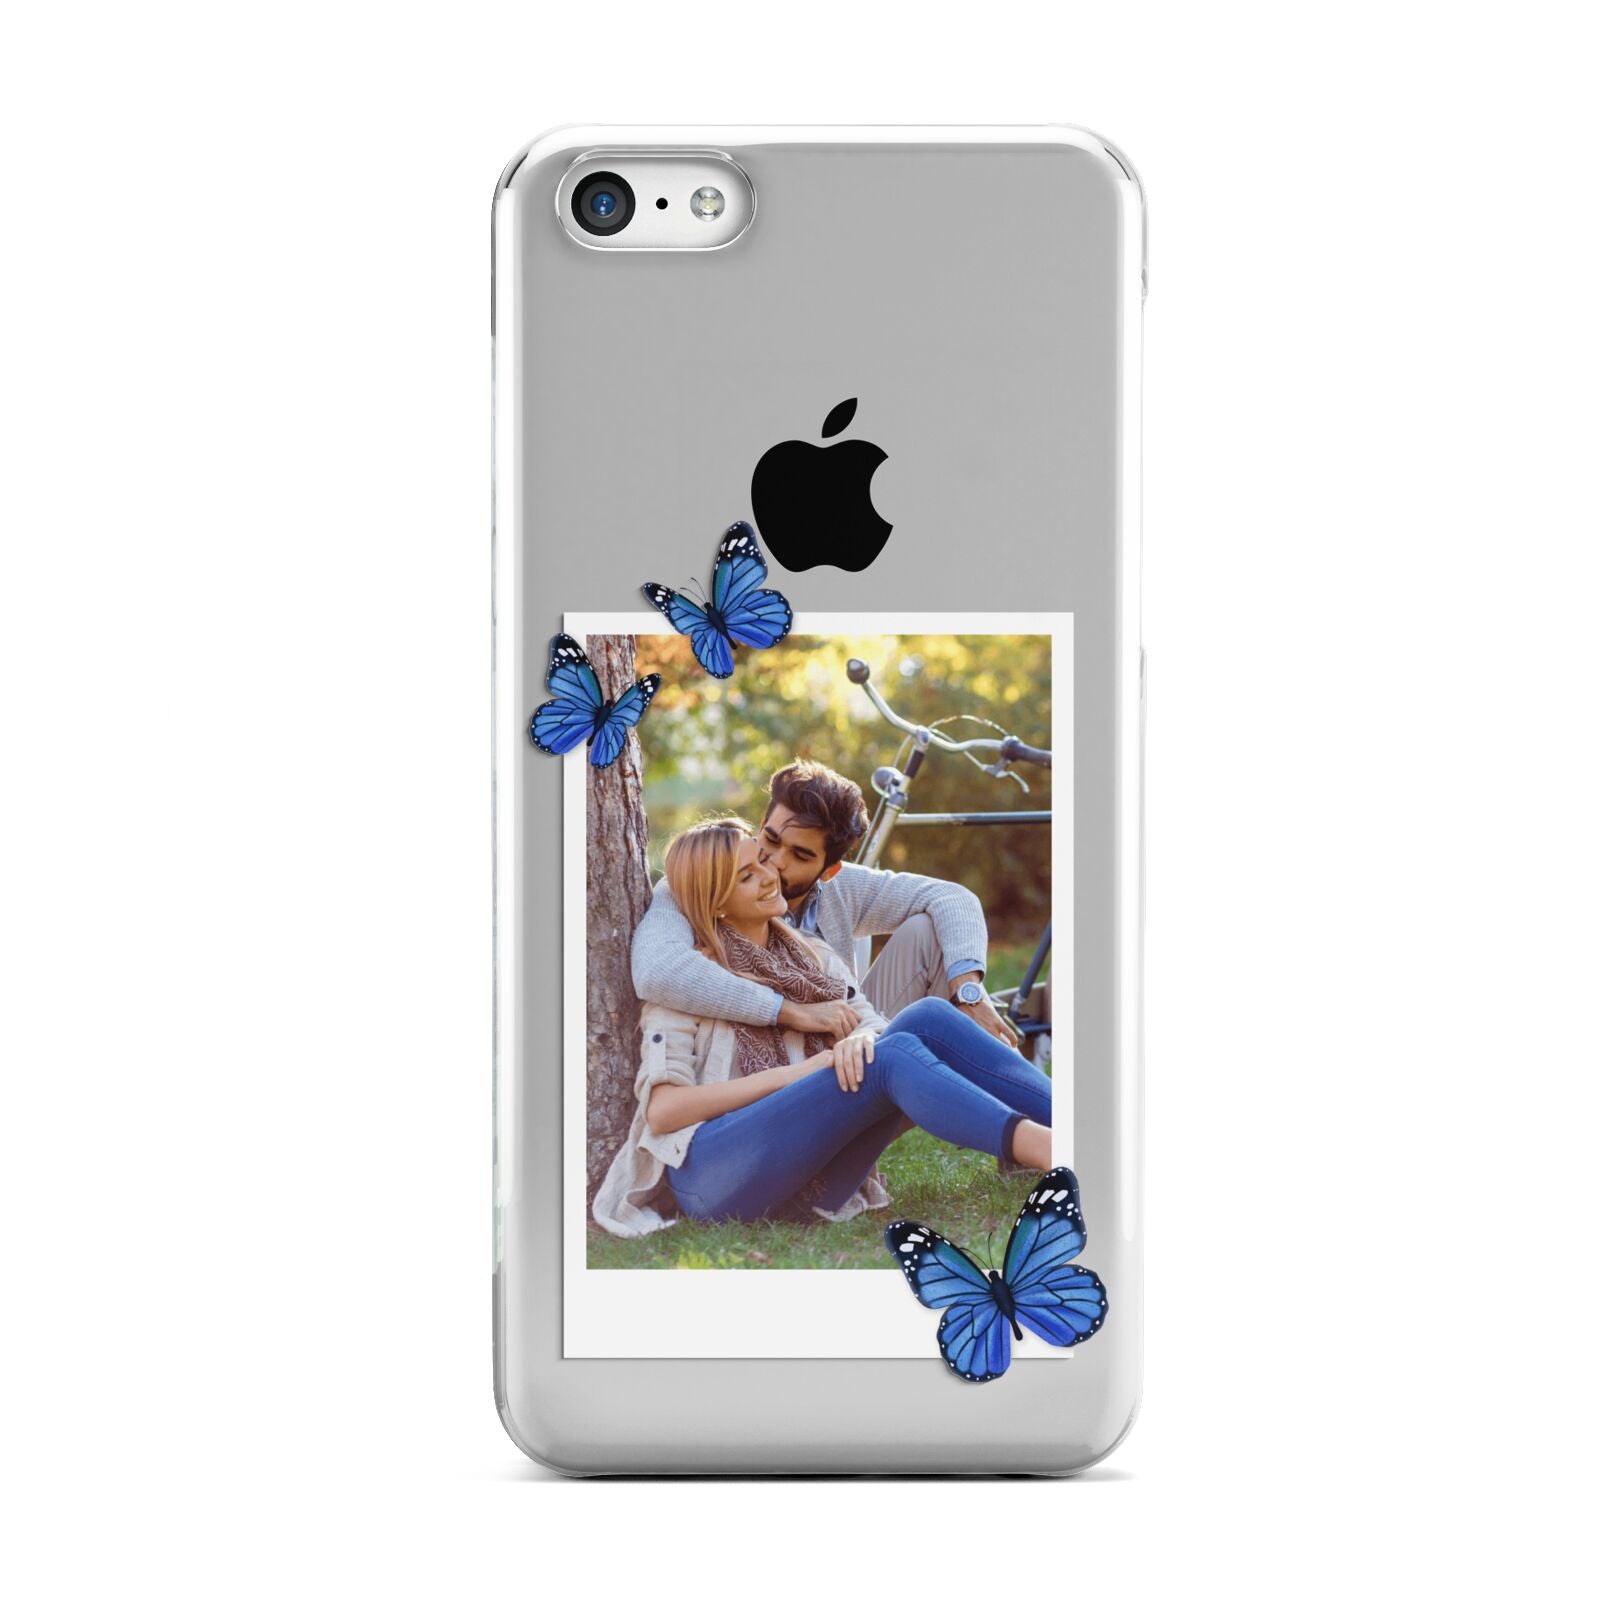 Polaroid Photo Apple iPhone 5c Case